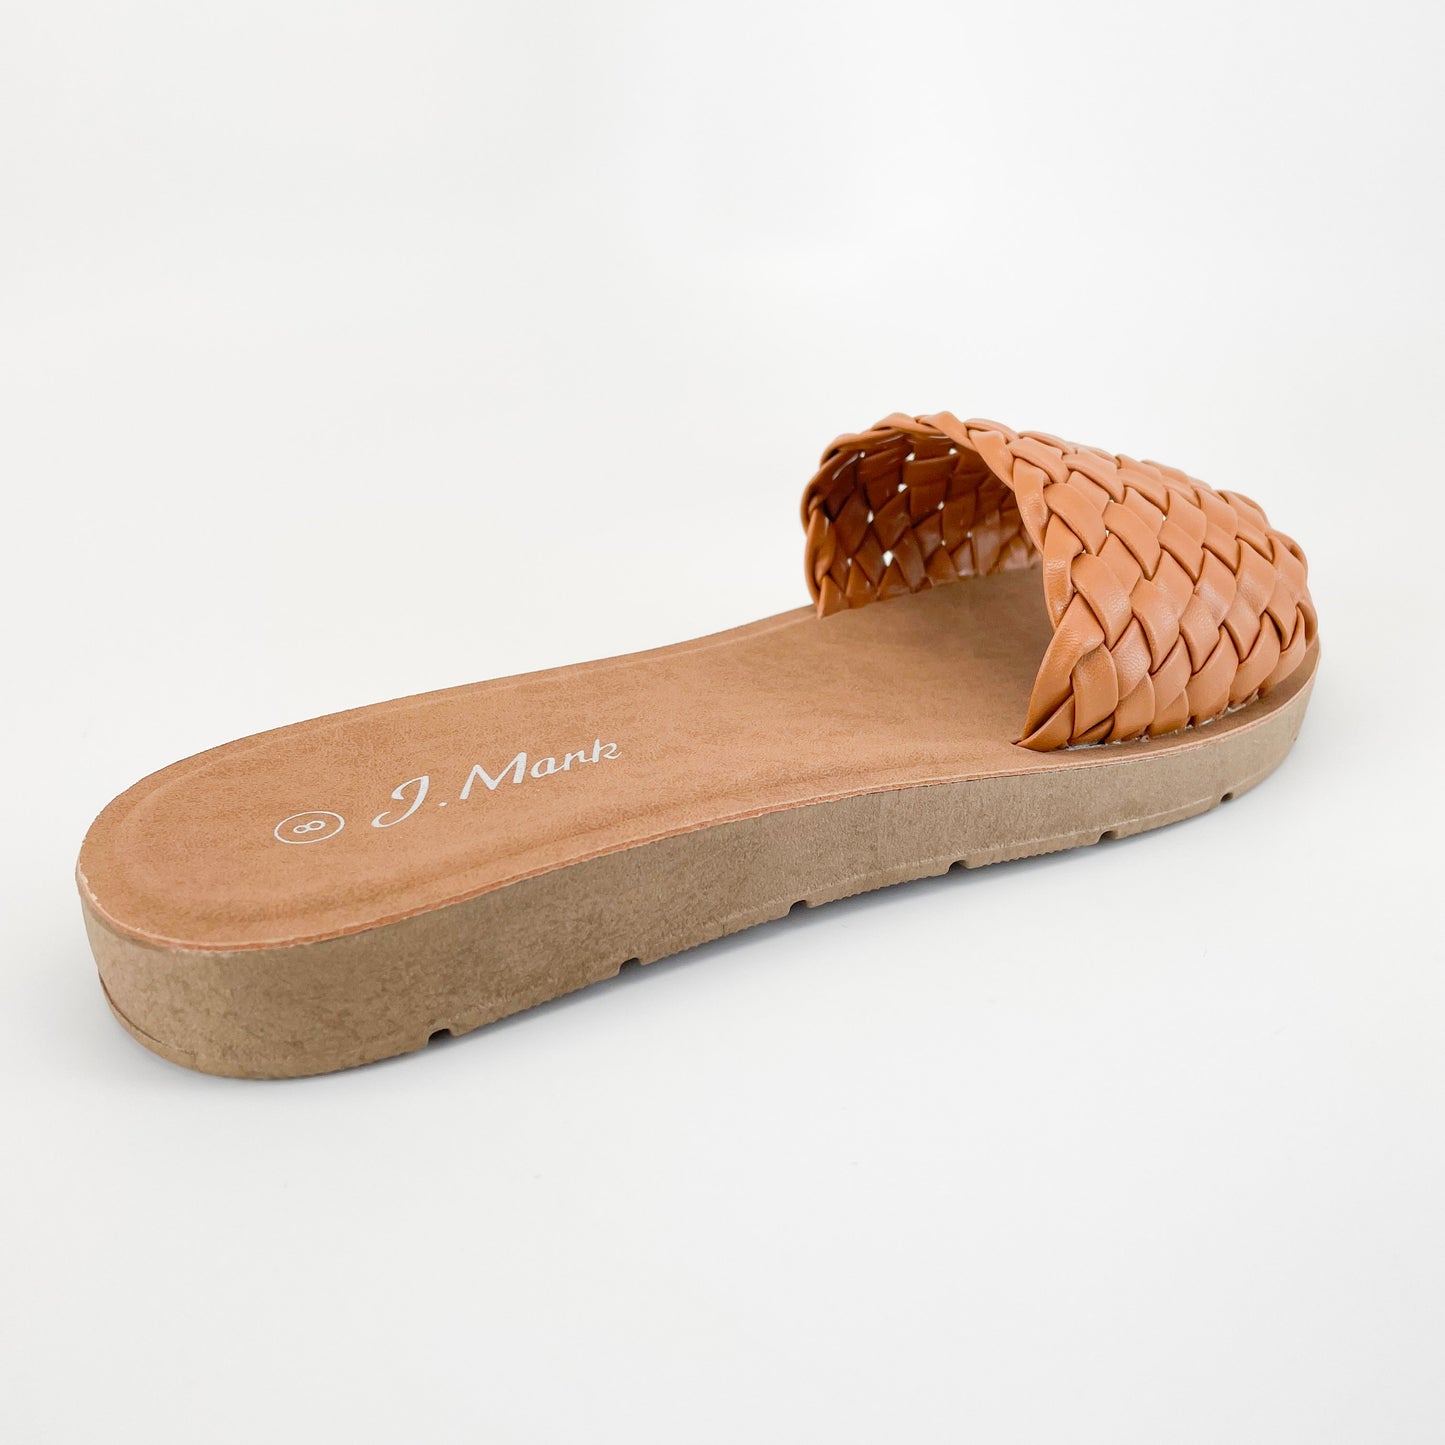 "Jasmine" Woven Sandals